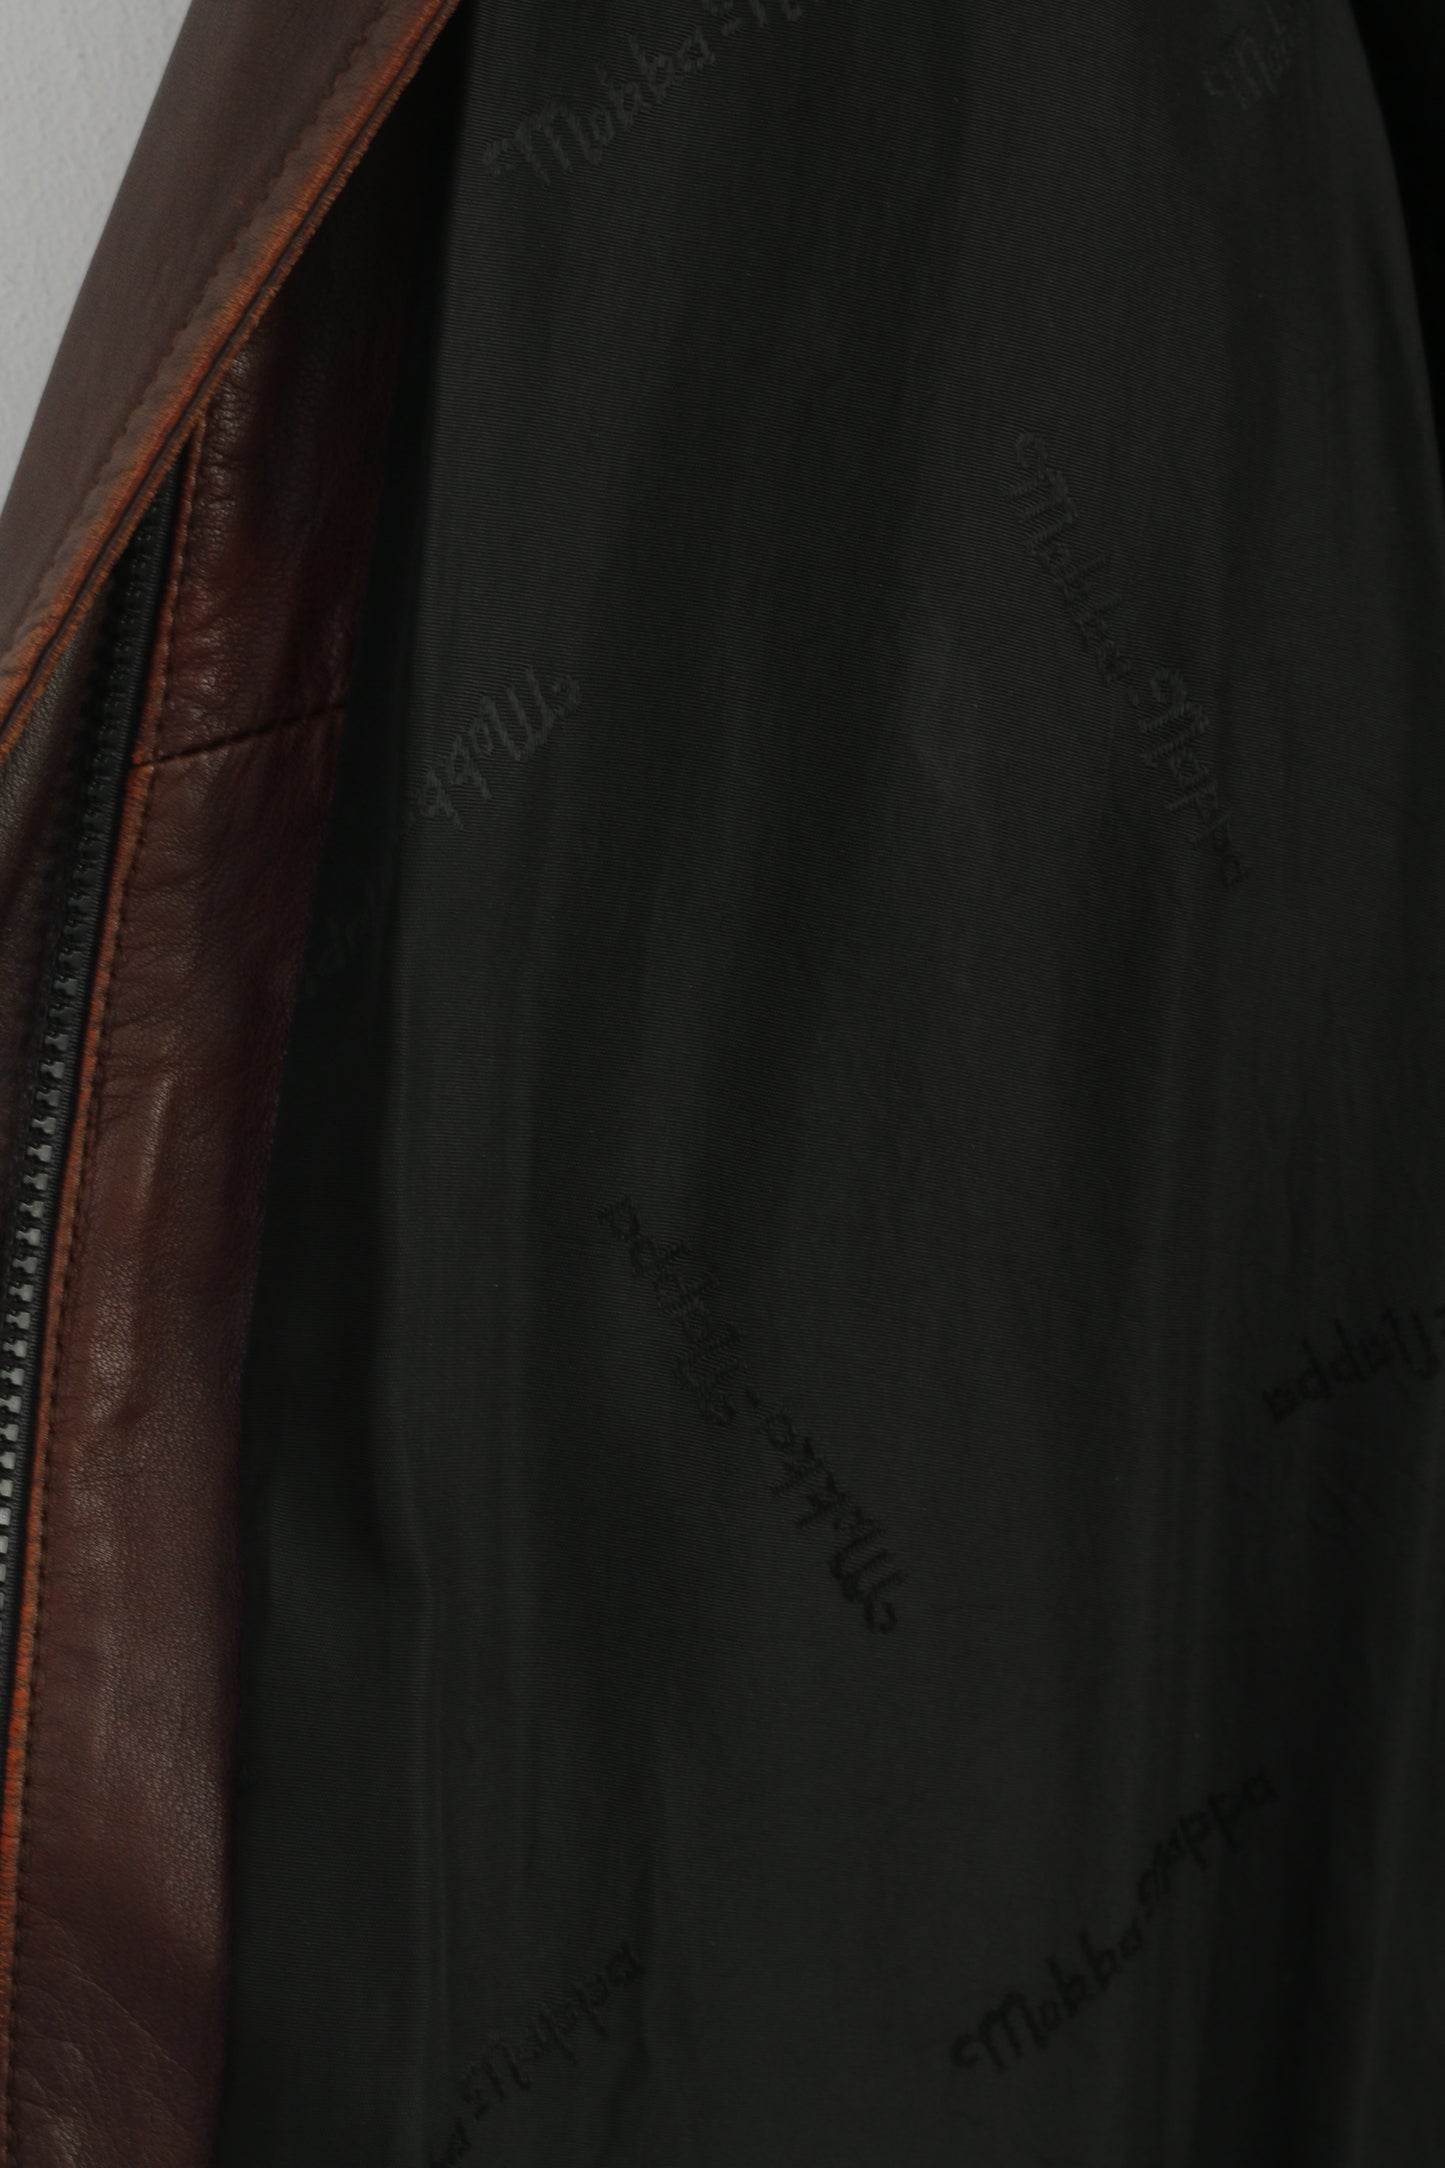 Mokka Nappa Finland Women 40 L Coat Brown Leather Lined Vintage Shoulder Pads Zip Up